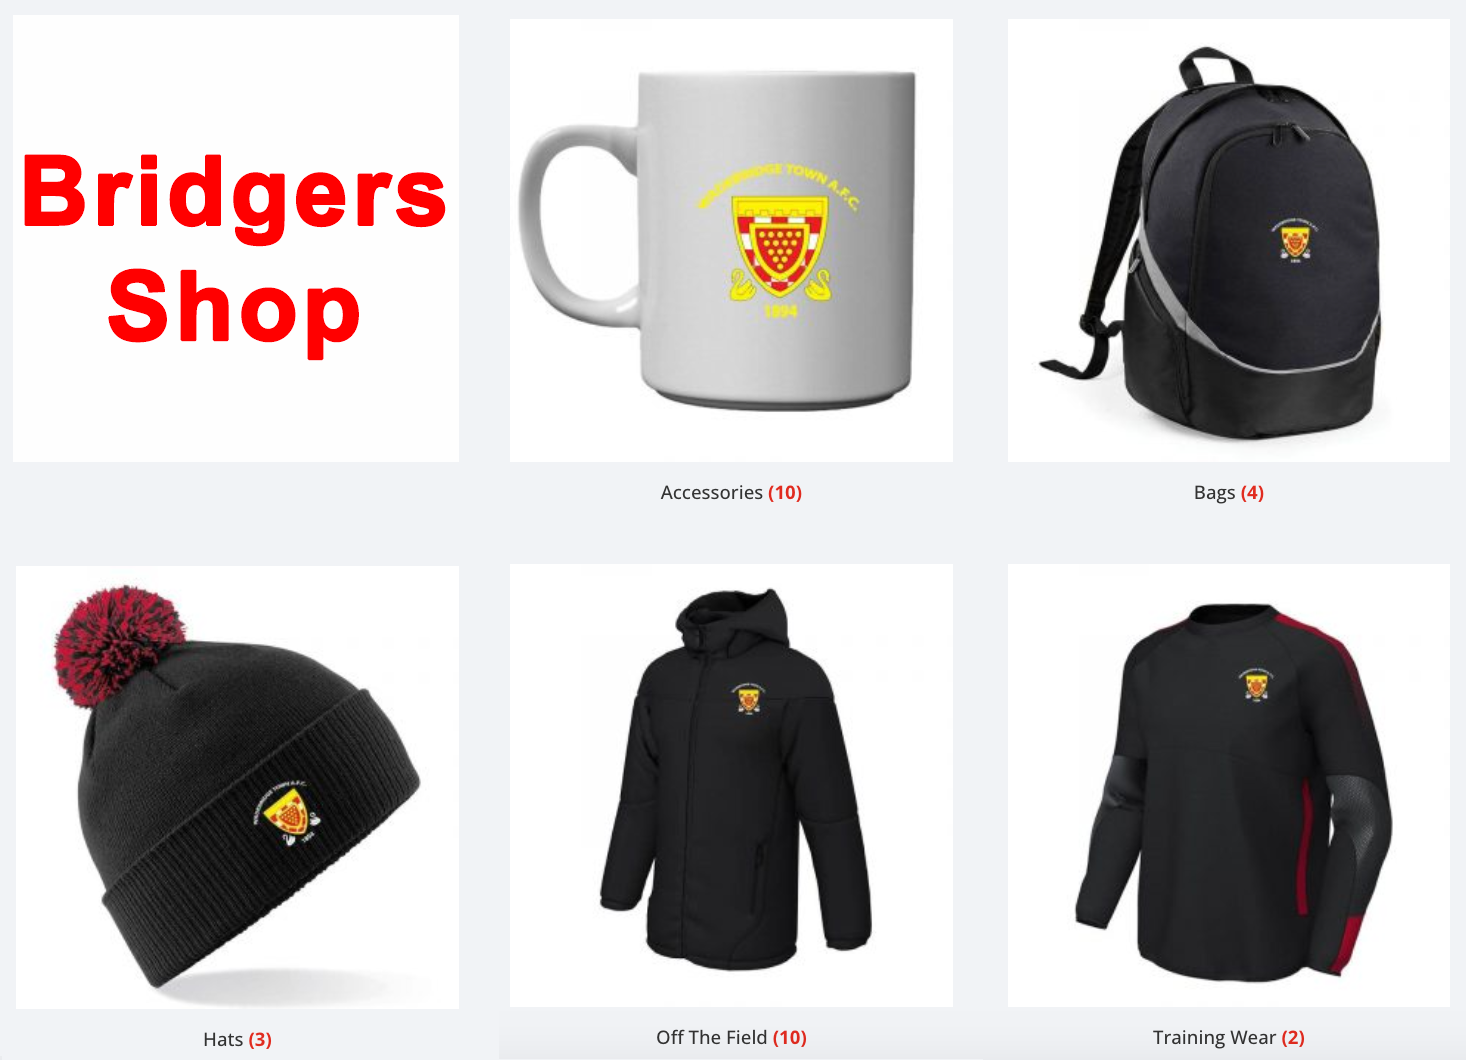 Bridgers Shop